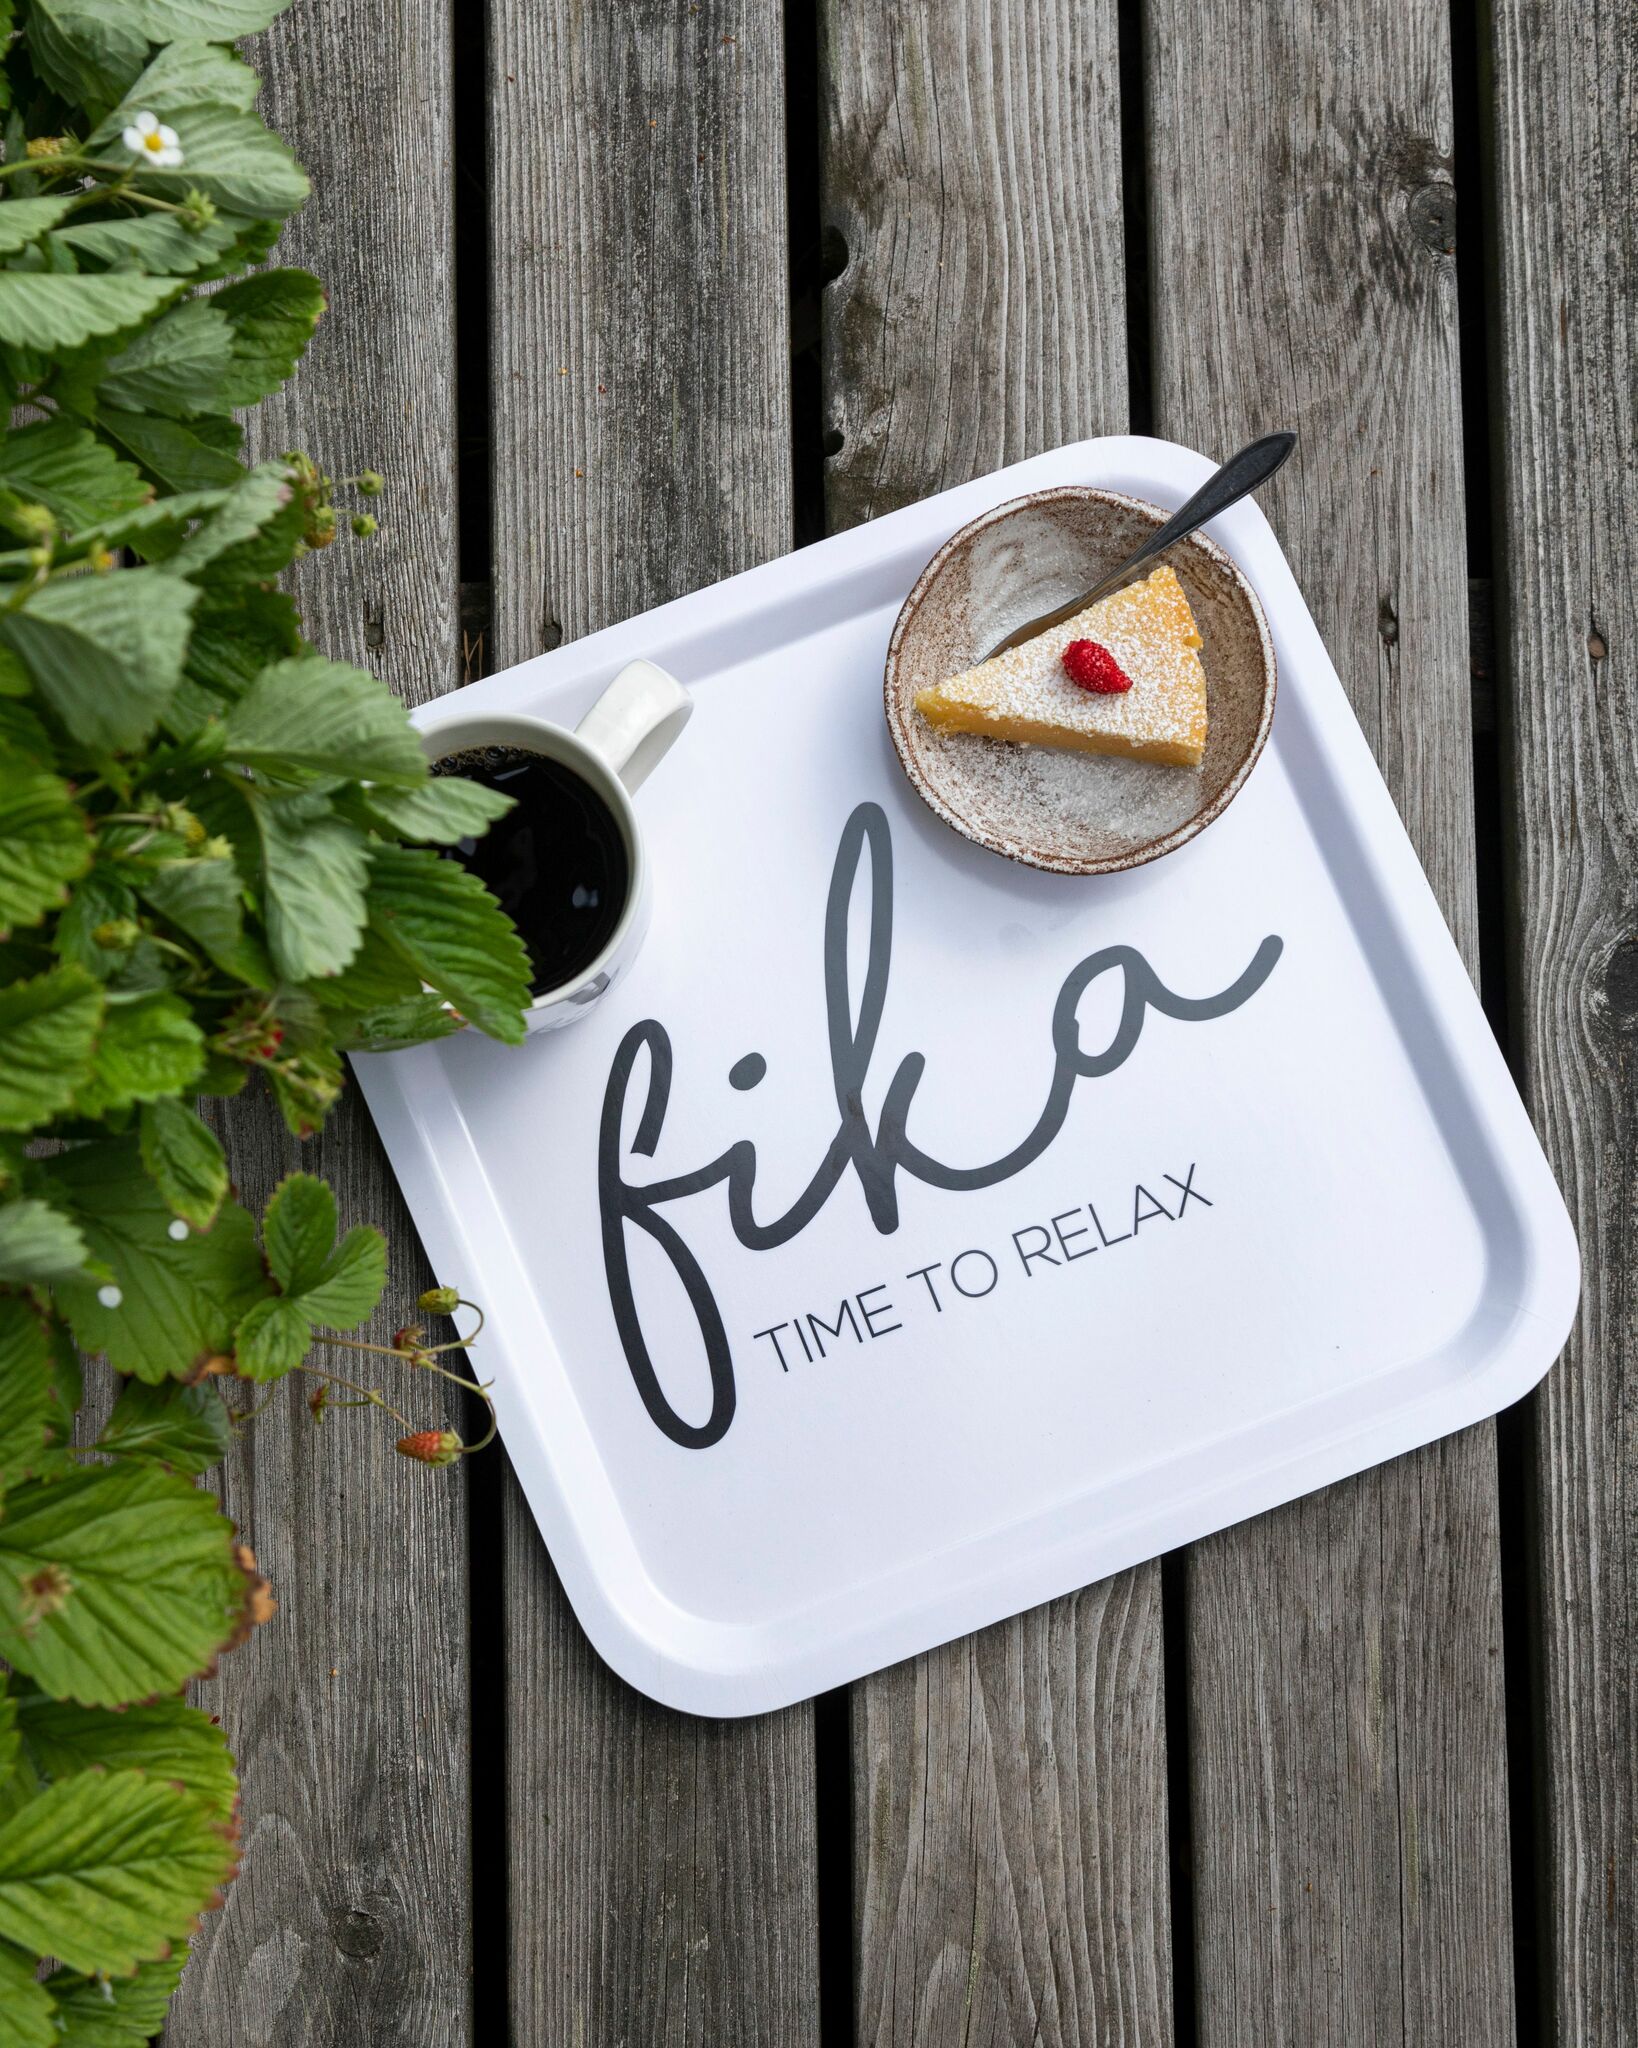 Bricka "Fika - Time to relax"